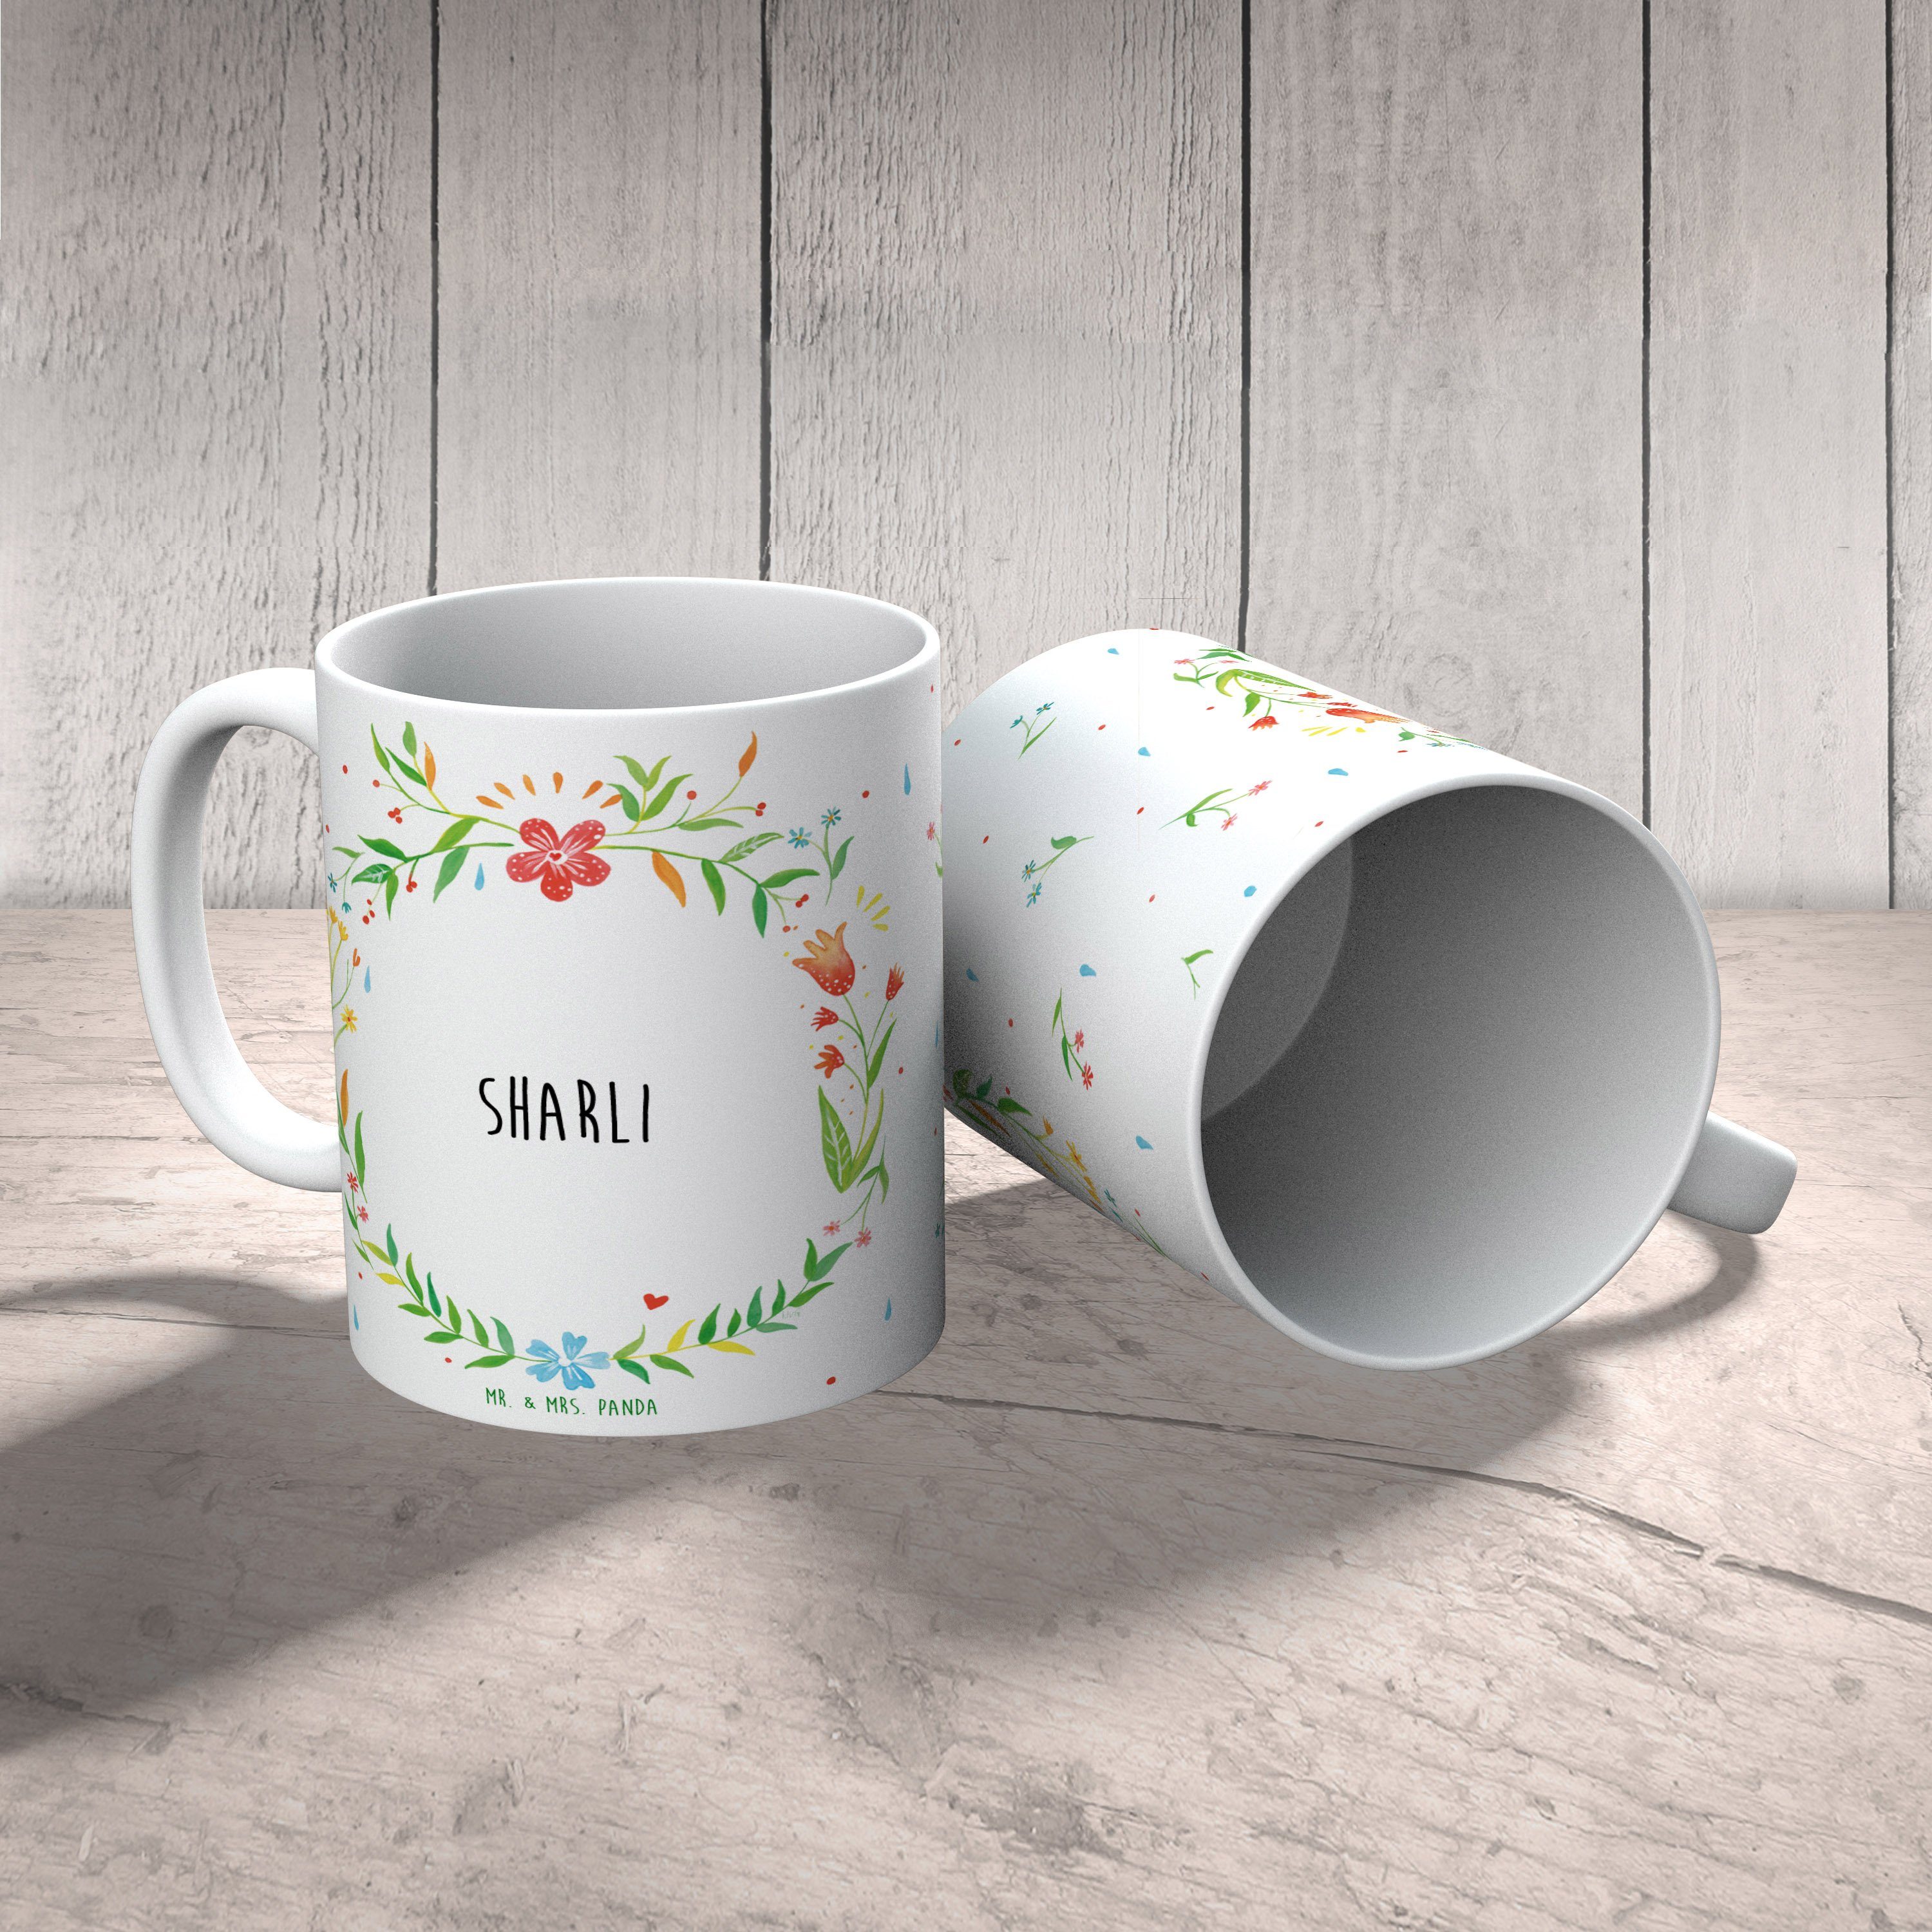 Keramik Tasse, Mrs. Büro Sharli Mr. Tasse, Geschenk Panda Teebecher, - Kaffeetasse, & Geschenk, Tasse